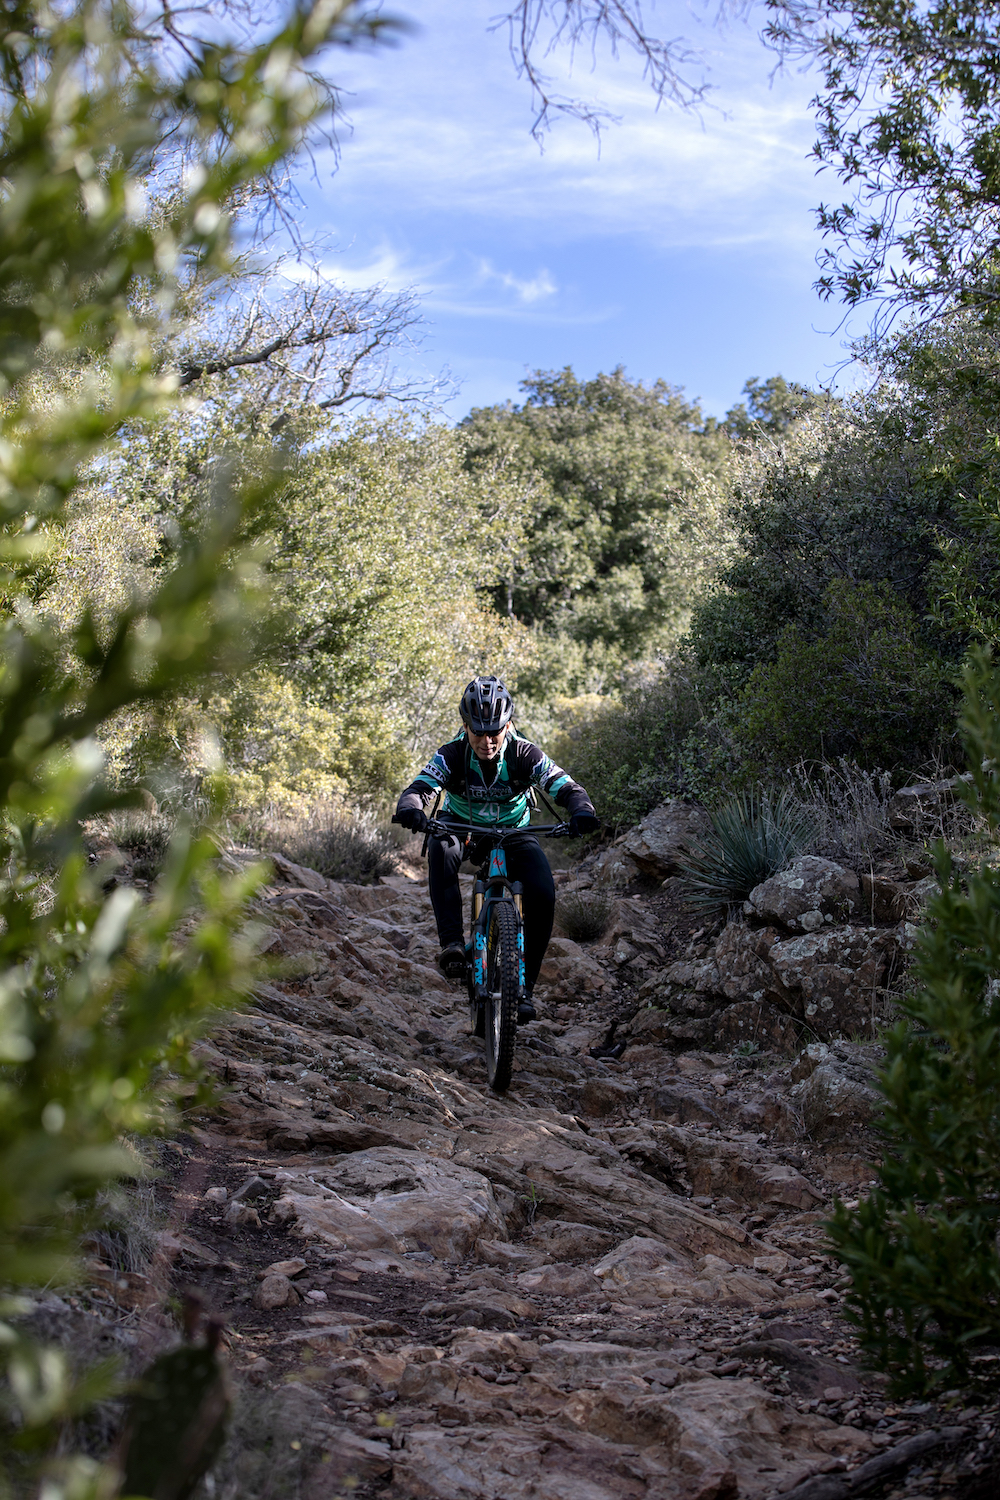 James Murren mountain bikes over rocky terrain near Laguna Mountain, San Diego